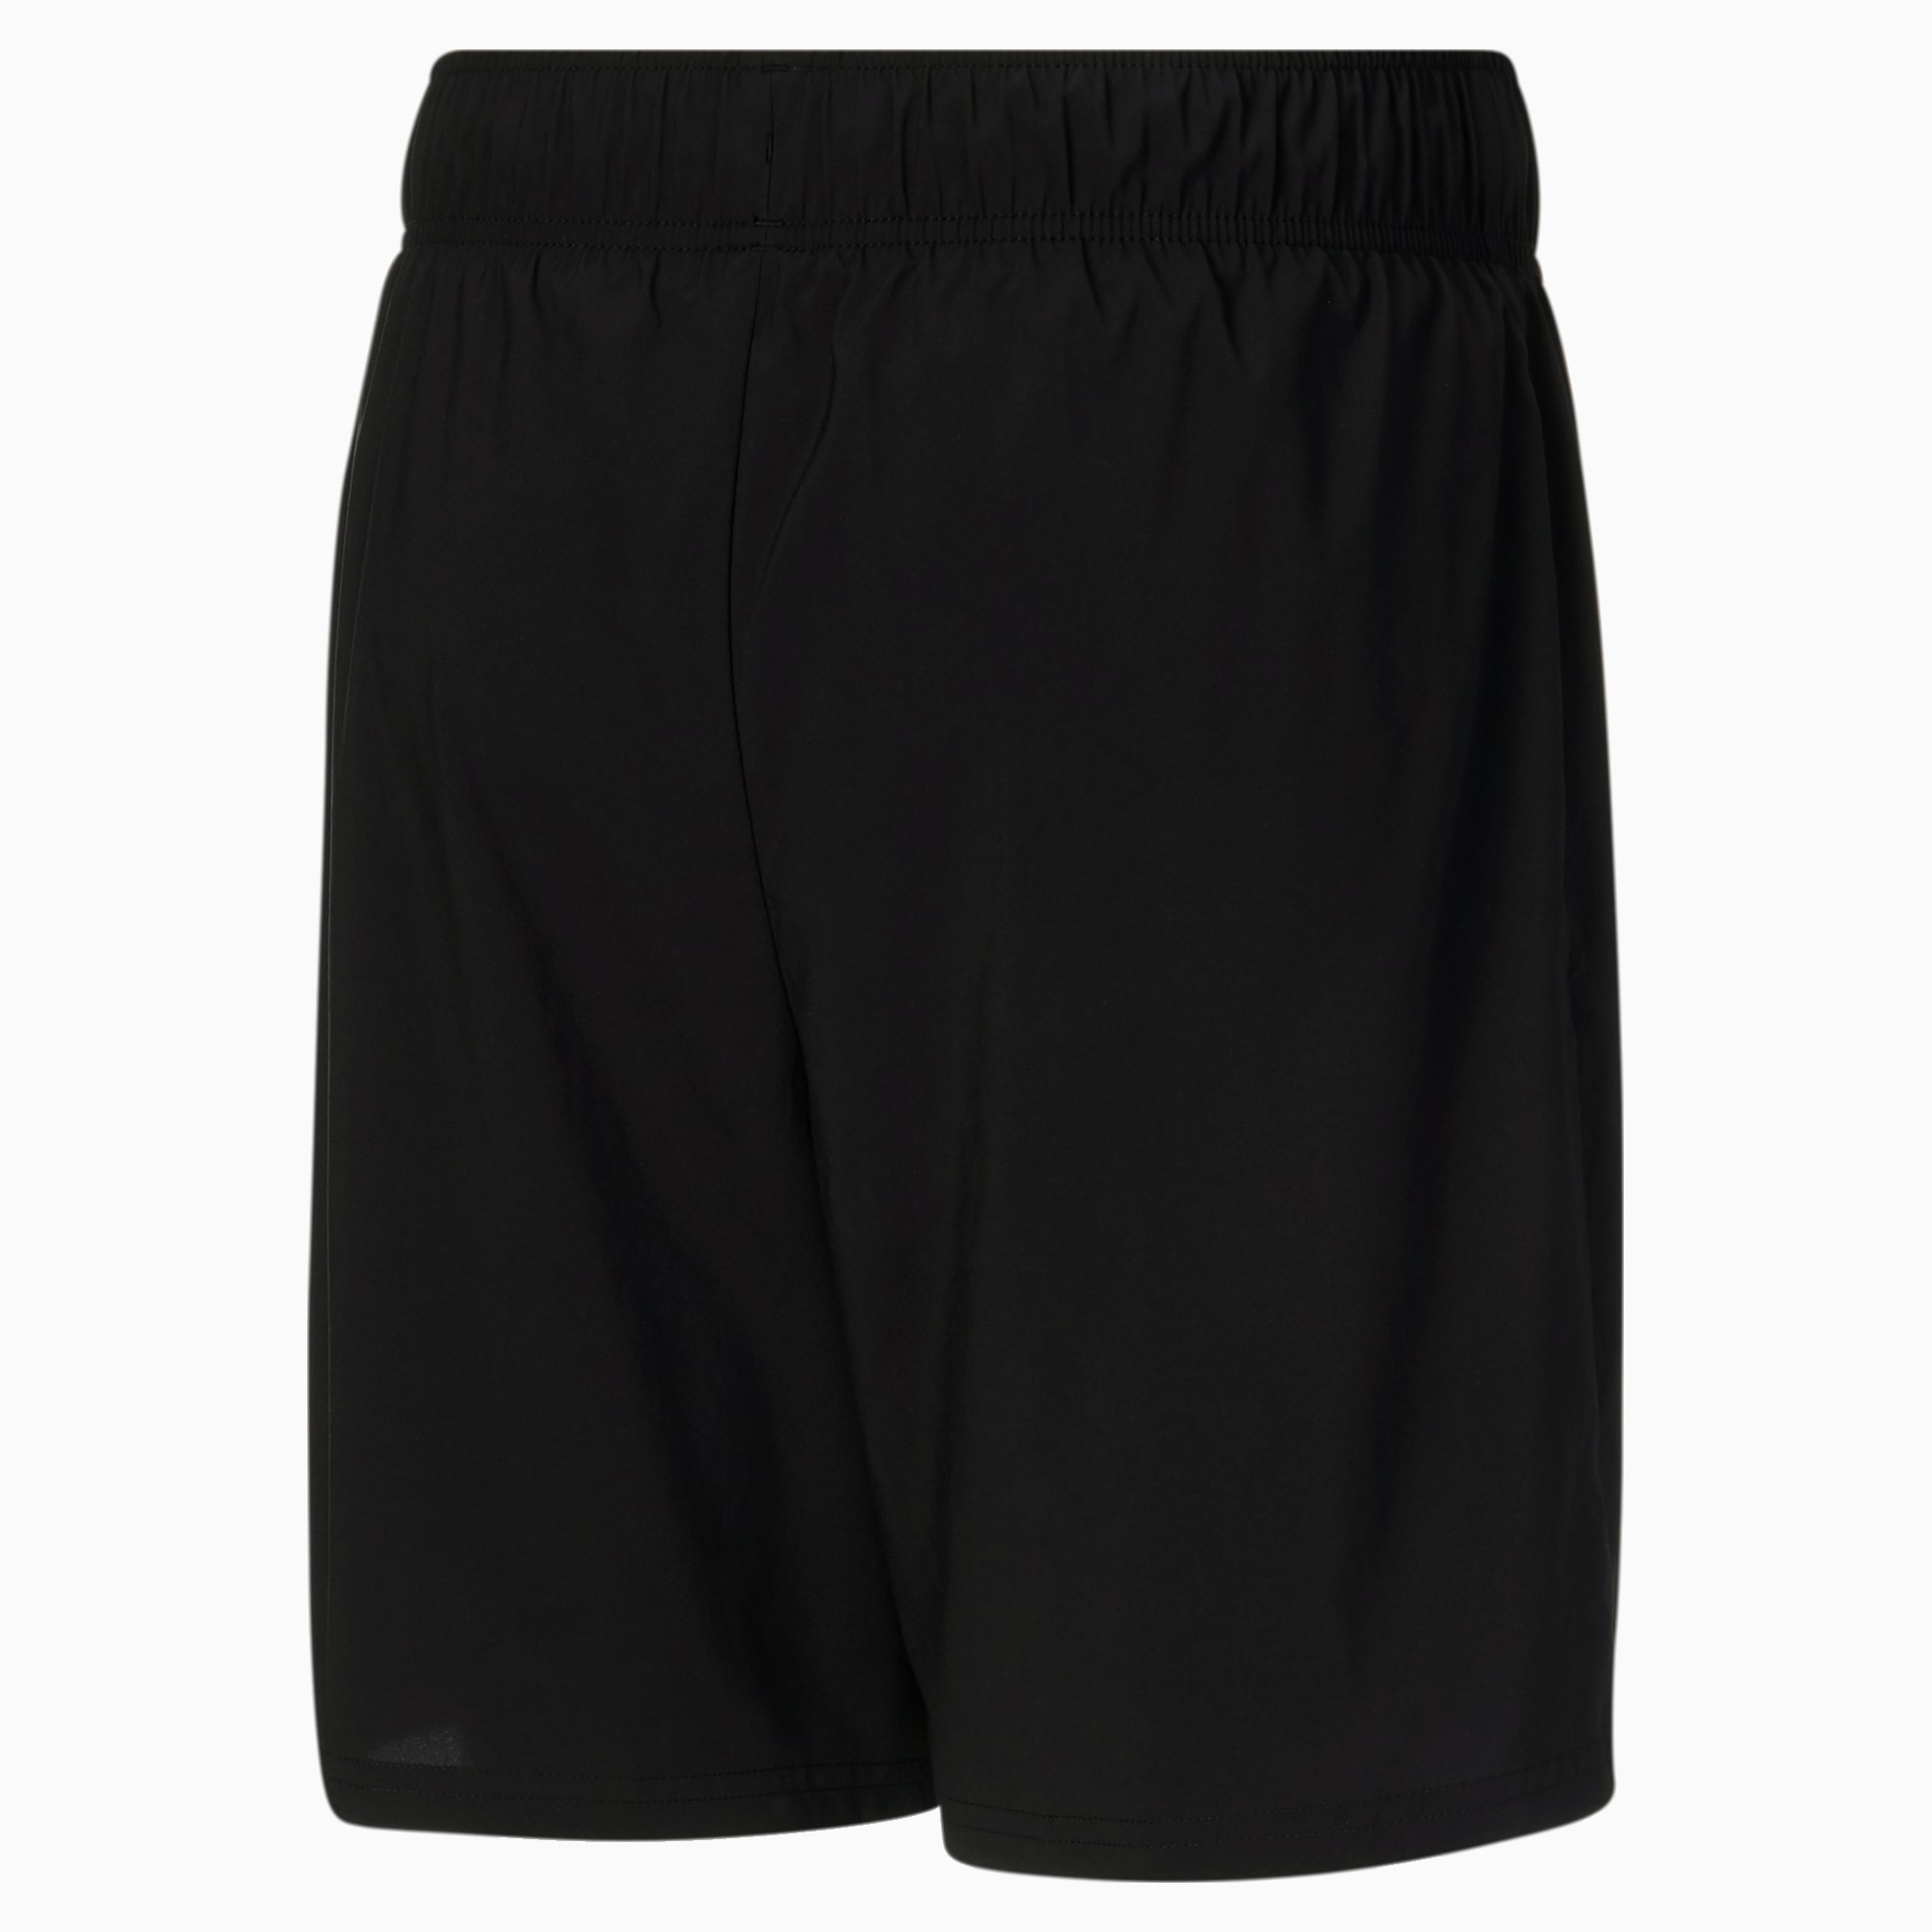 PUMA Favourite 2-in-1 Men's Running Shorts, Black, Size M, Clothing